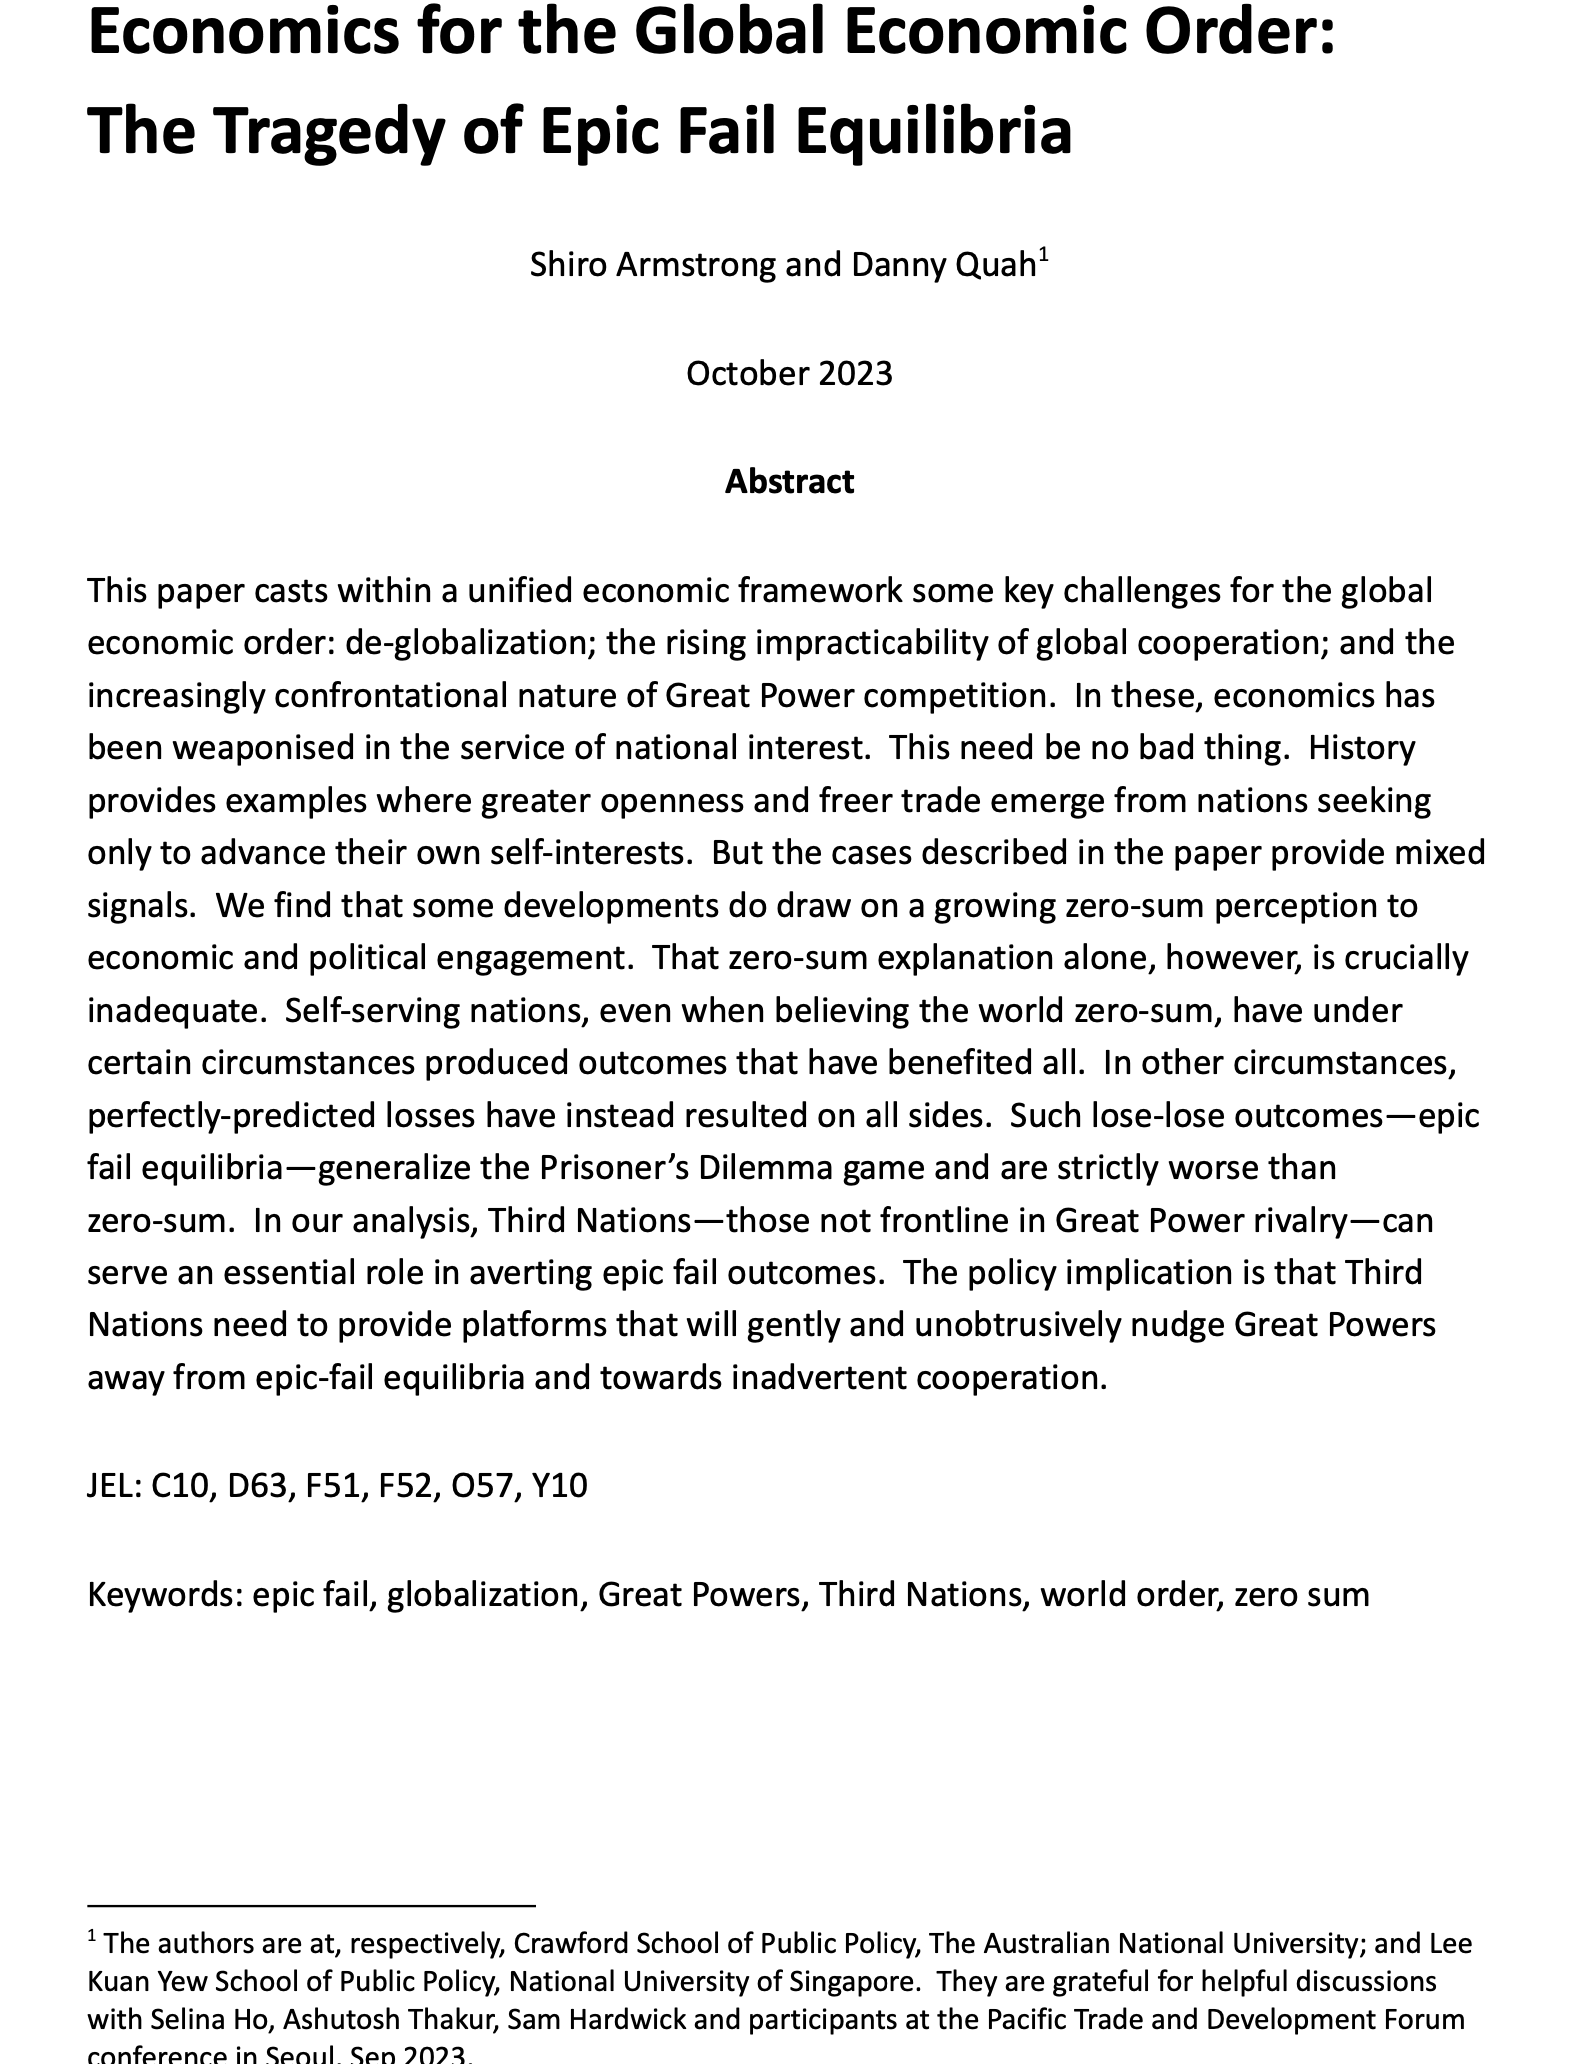 Global Economic Order - Titlepage